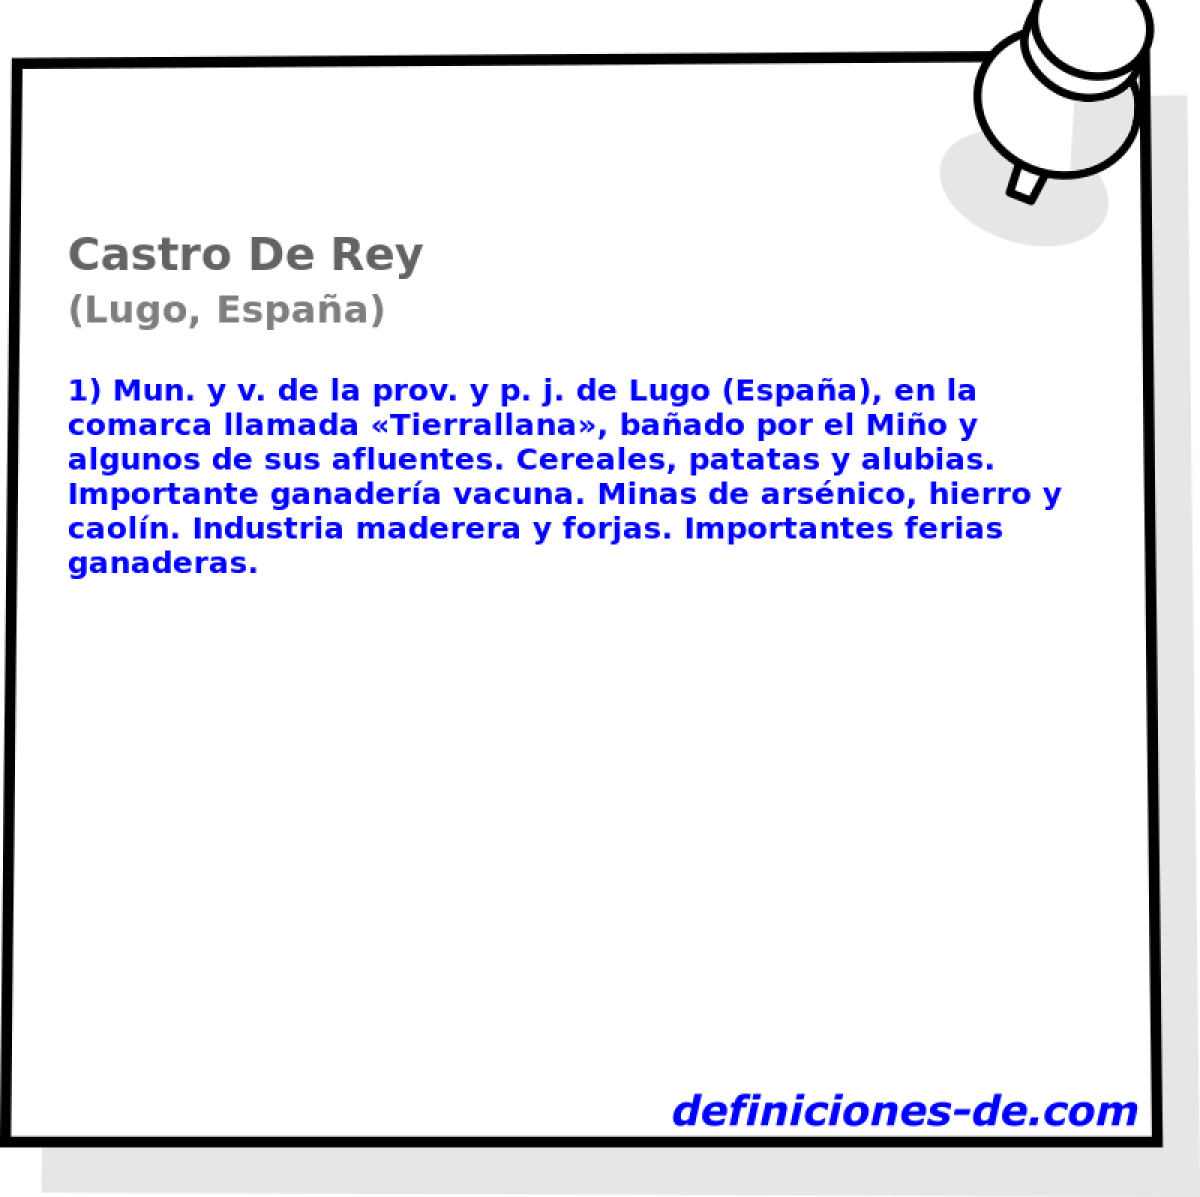 Castro De Rey (Lugo, Espaa)